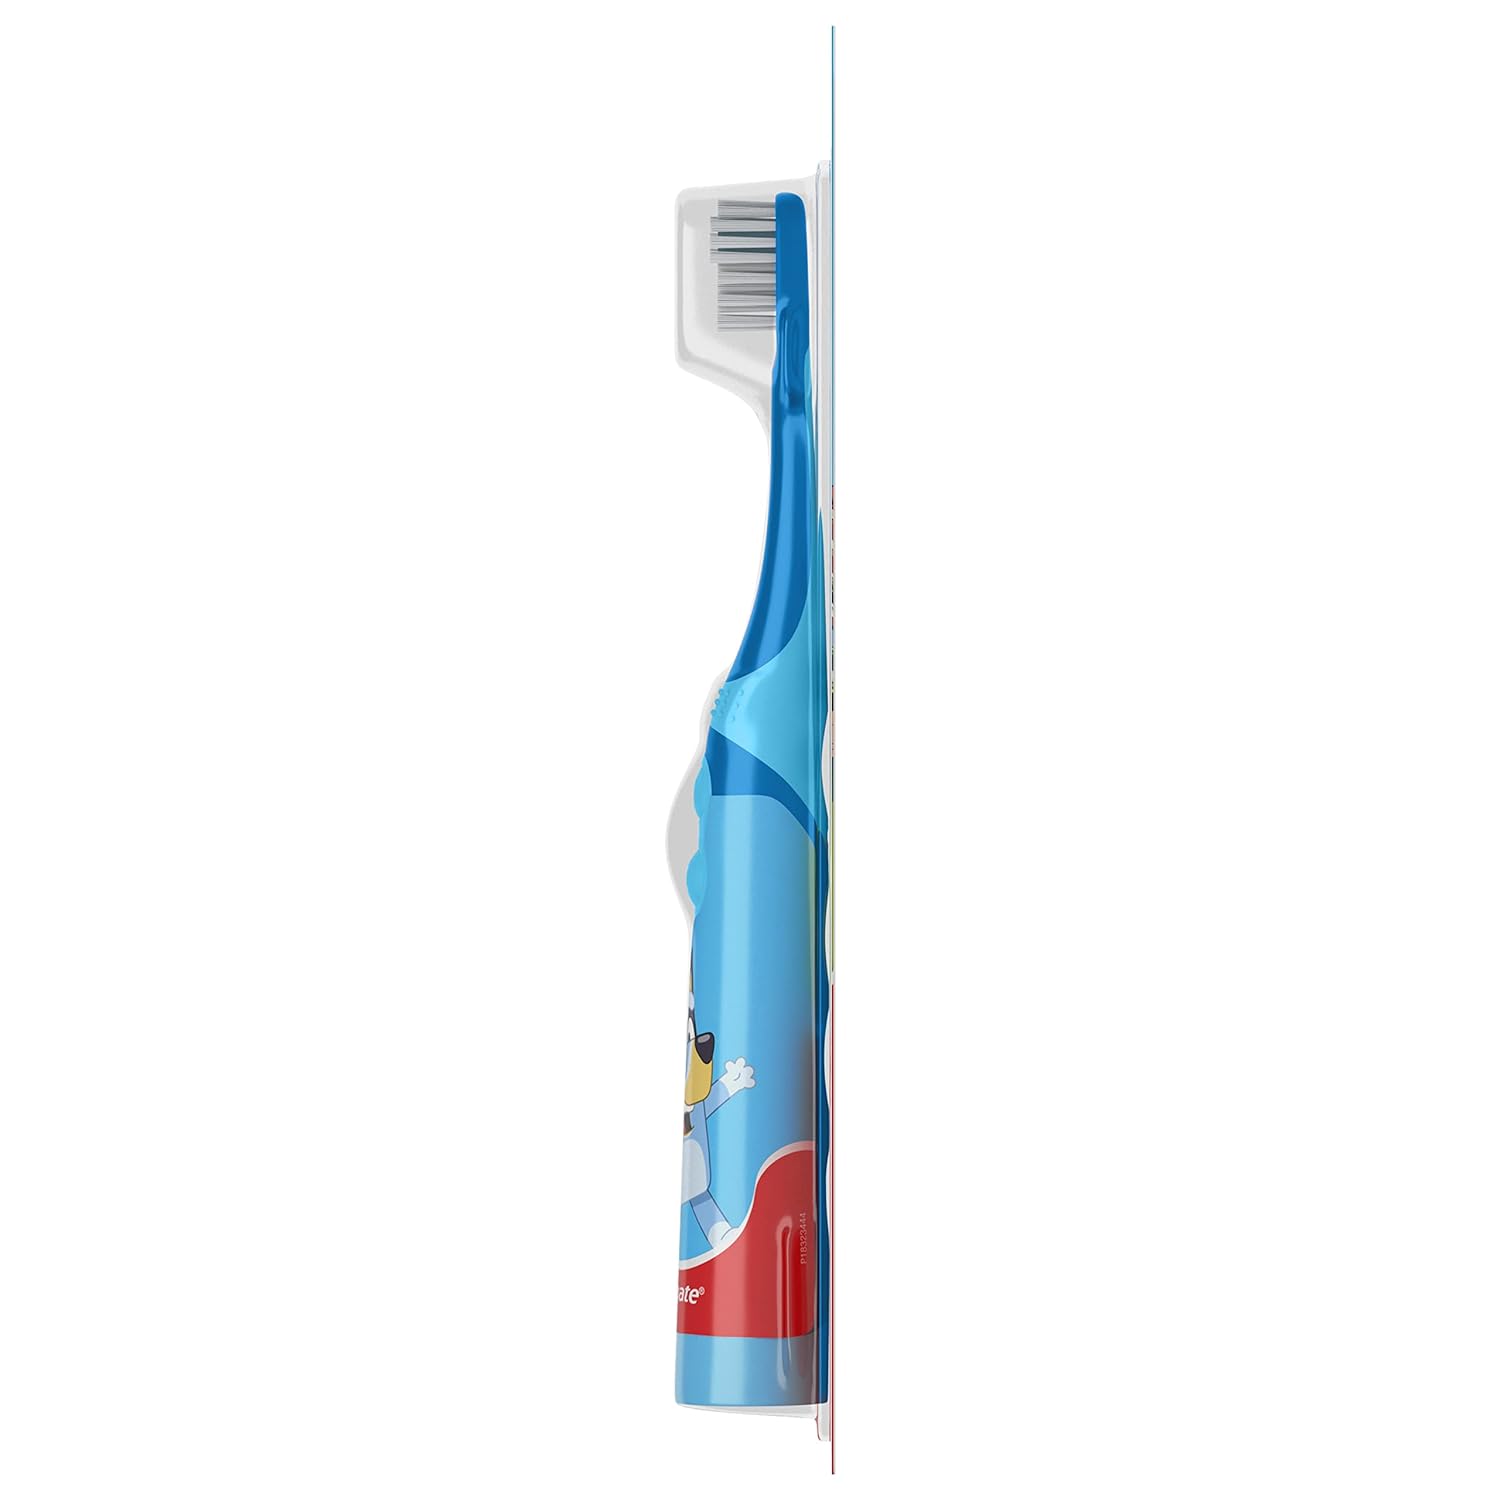 Colgate Kids Battery Powered Toothbrush - Bluey